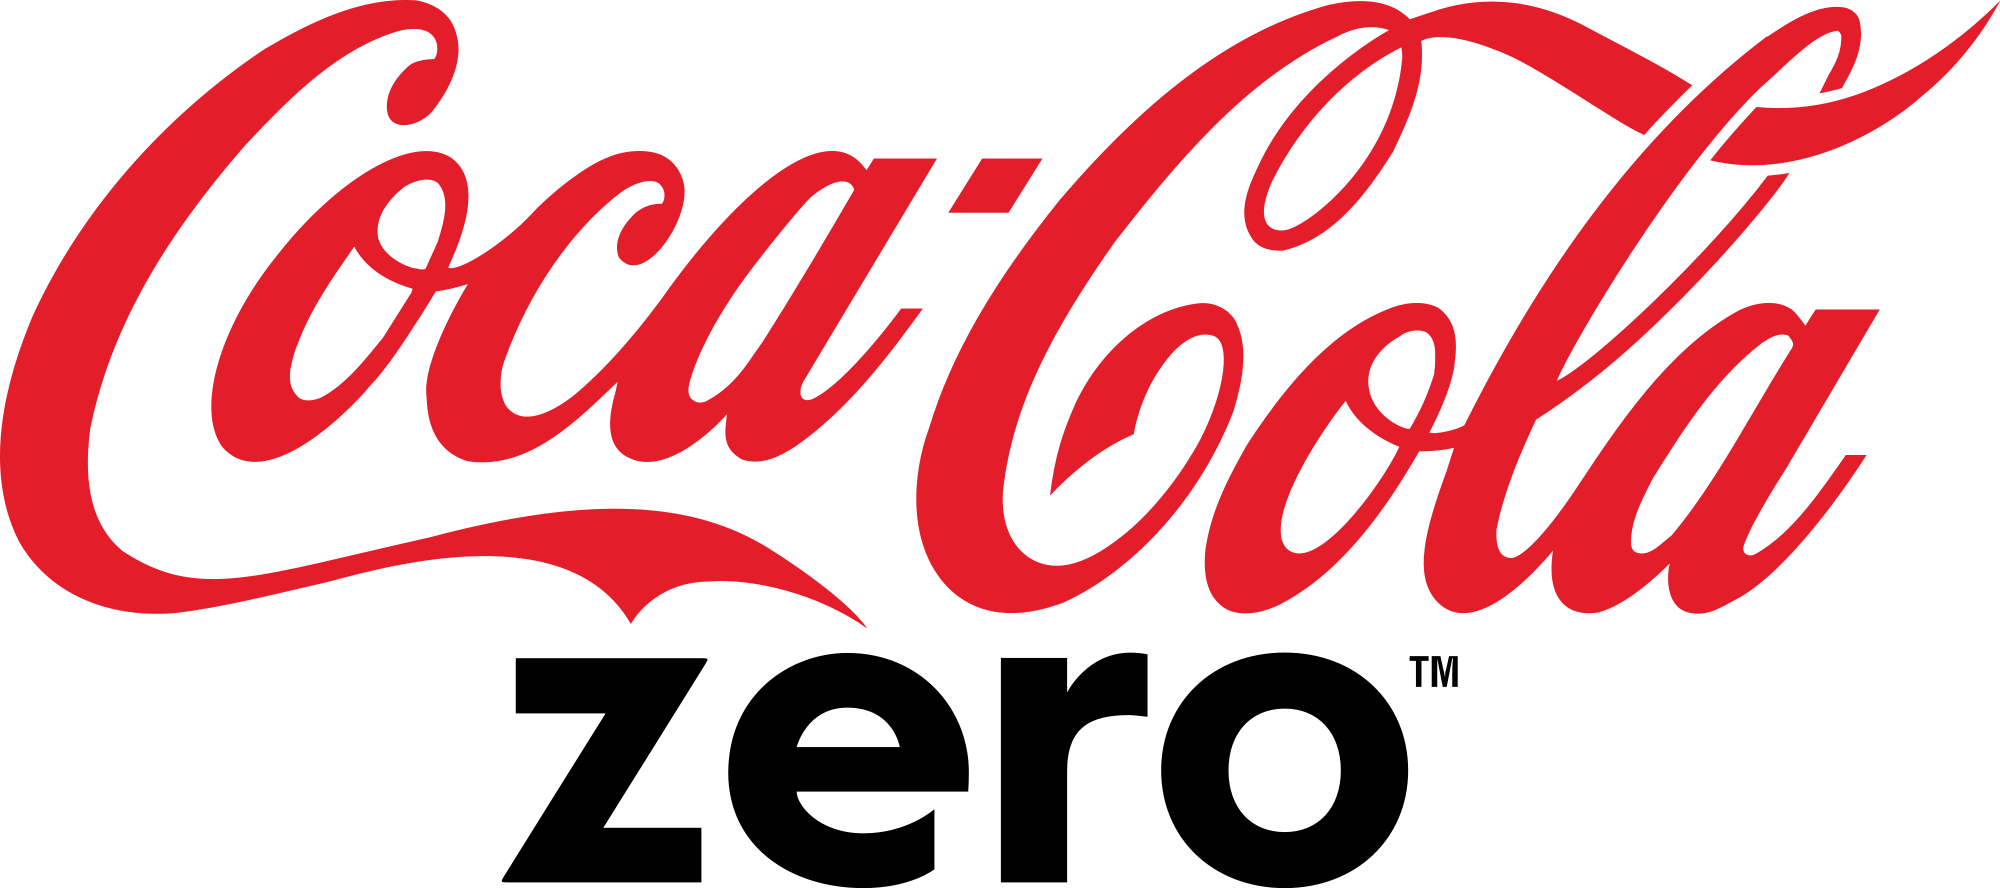 Coca Cola svg #15, Download drawings